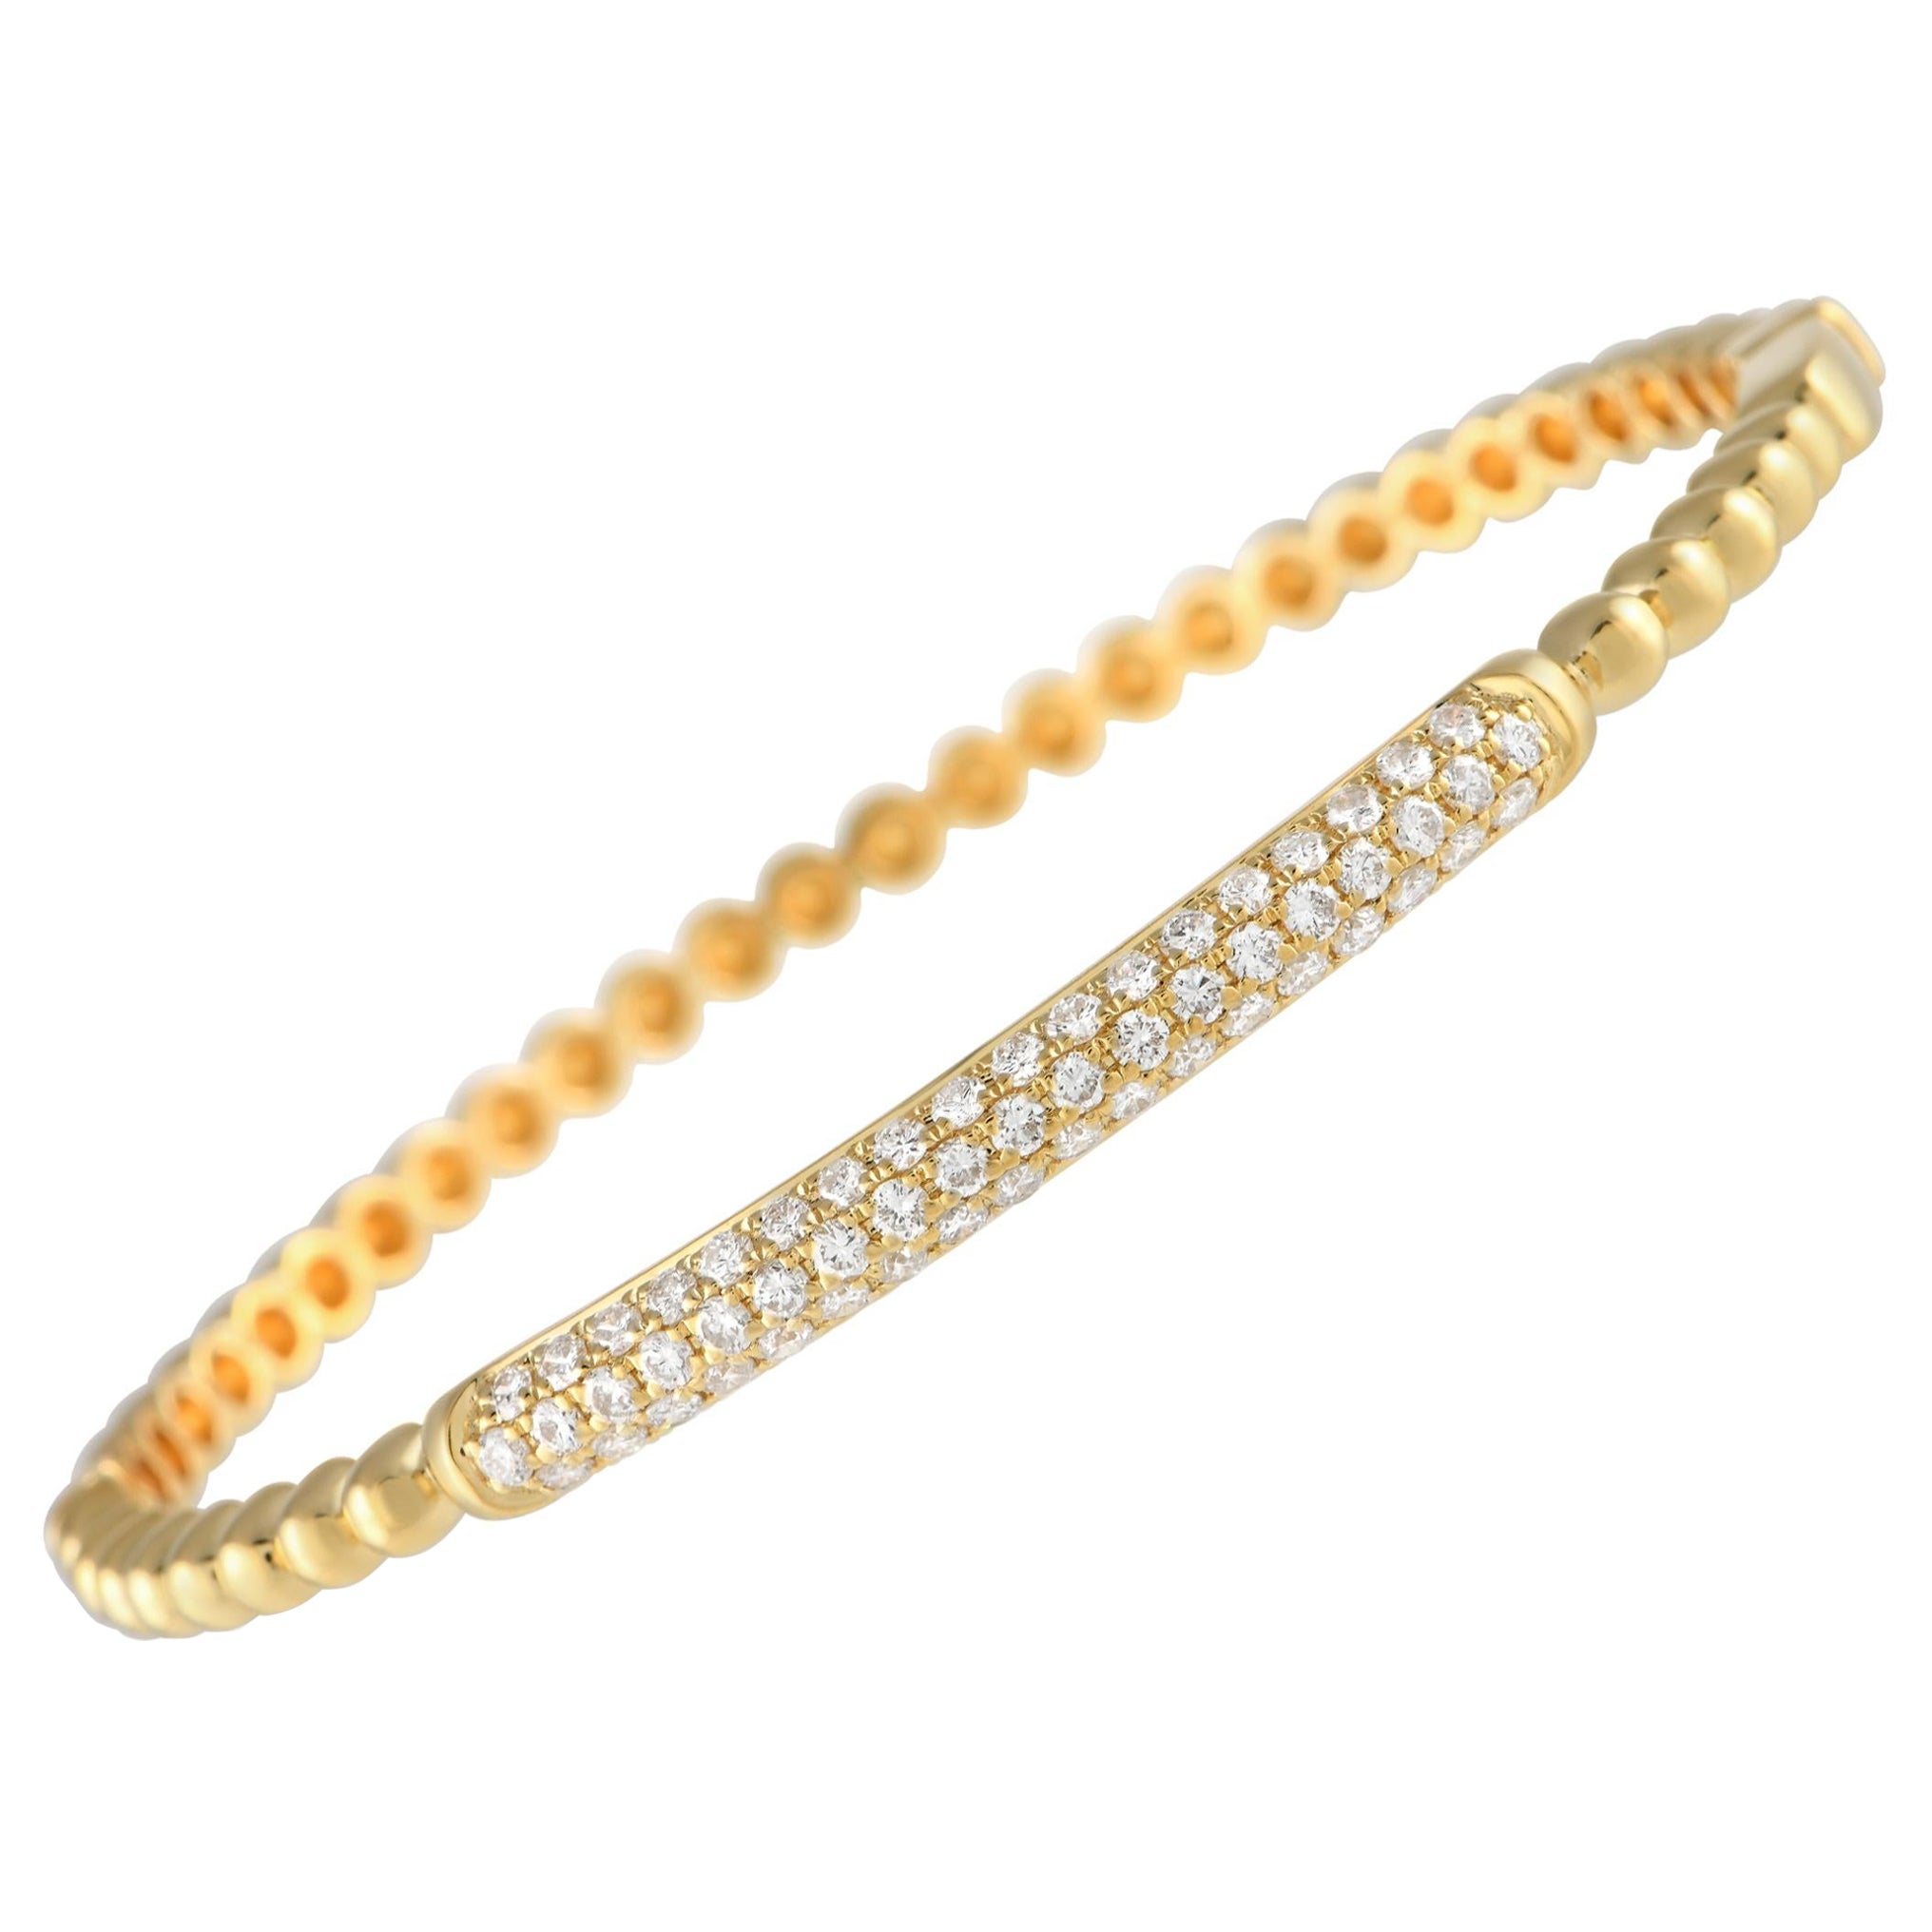 LB Exclusive 18Karat Yellow Gold 1.06Carat Diamond Bracelet For Sale